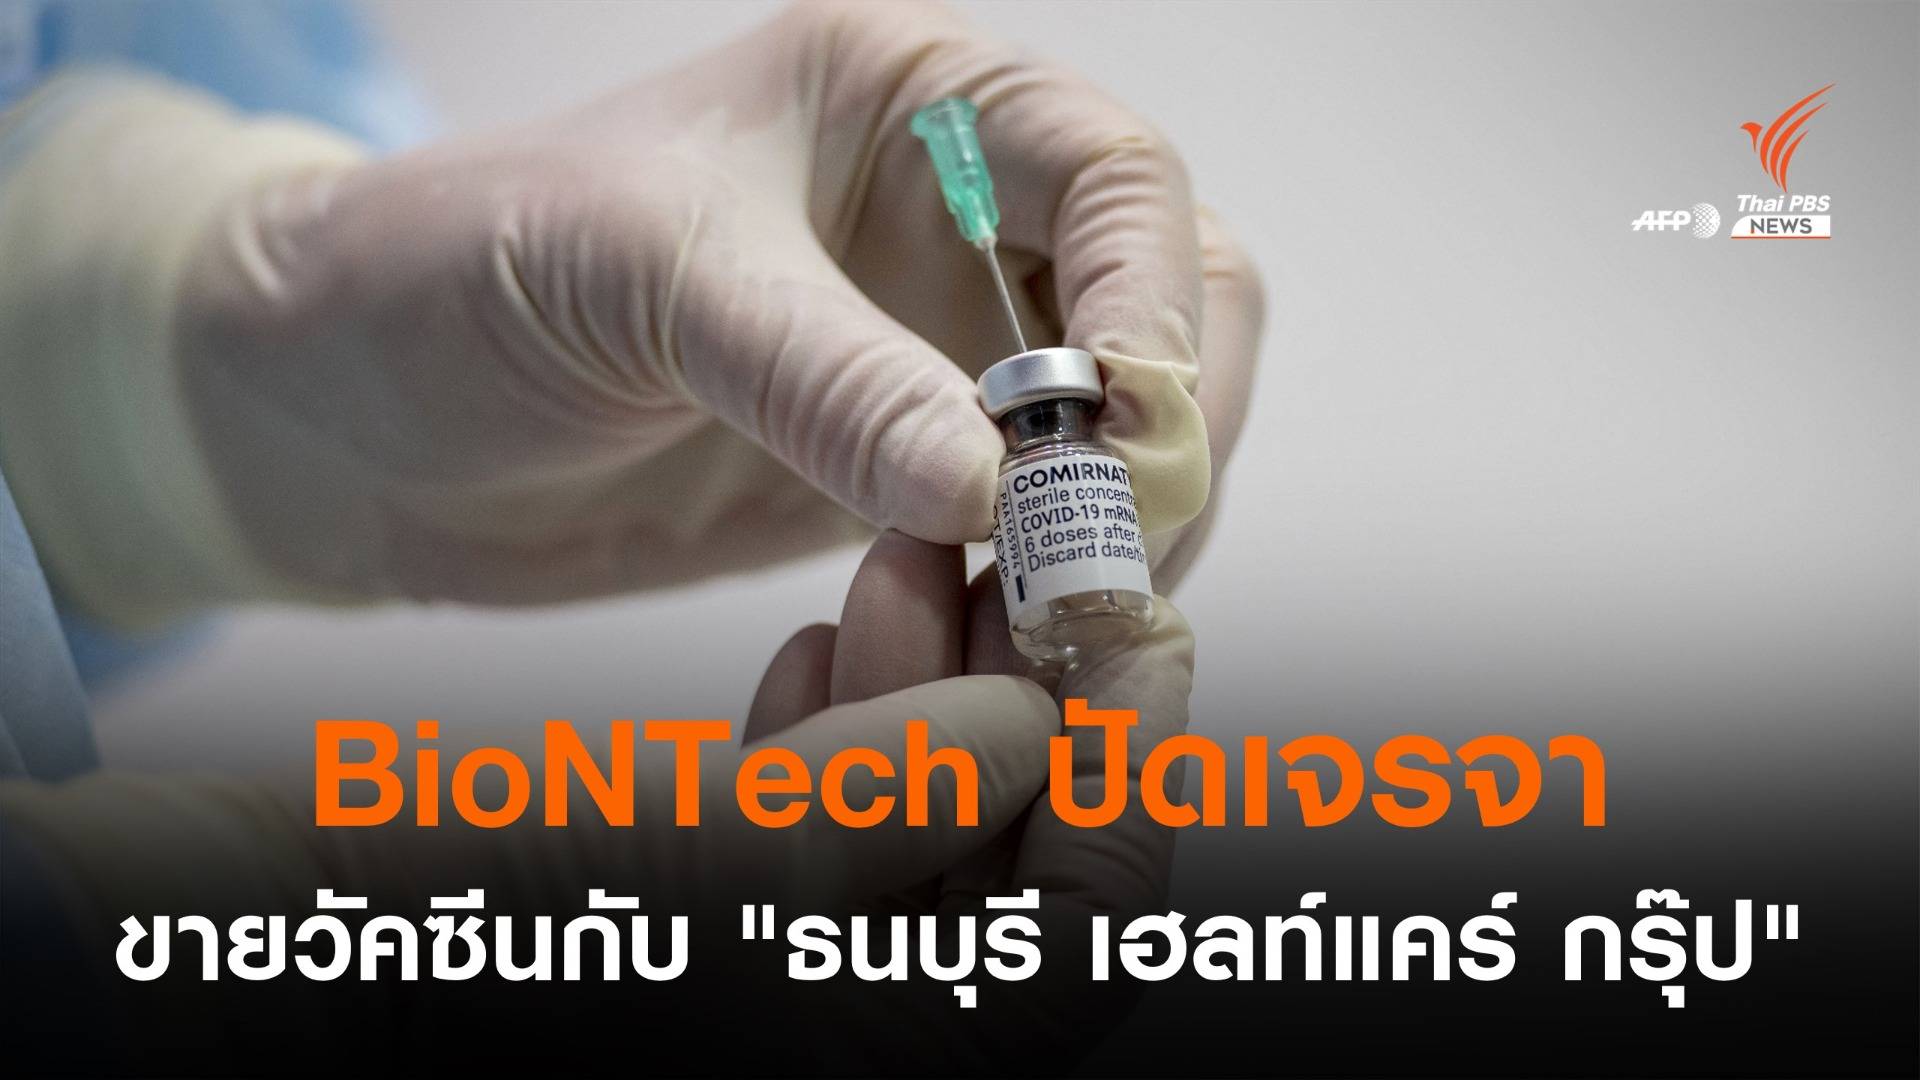 BioNTech ปัดเจรจาขายวัคซีนกับ "ธนบุรี เฮลท์แคร์ กรุ๊ป"